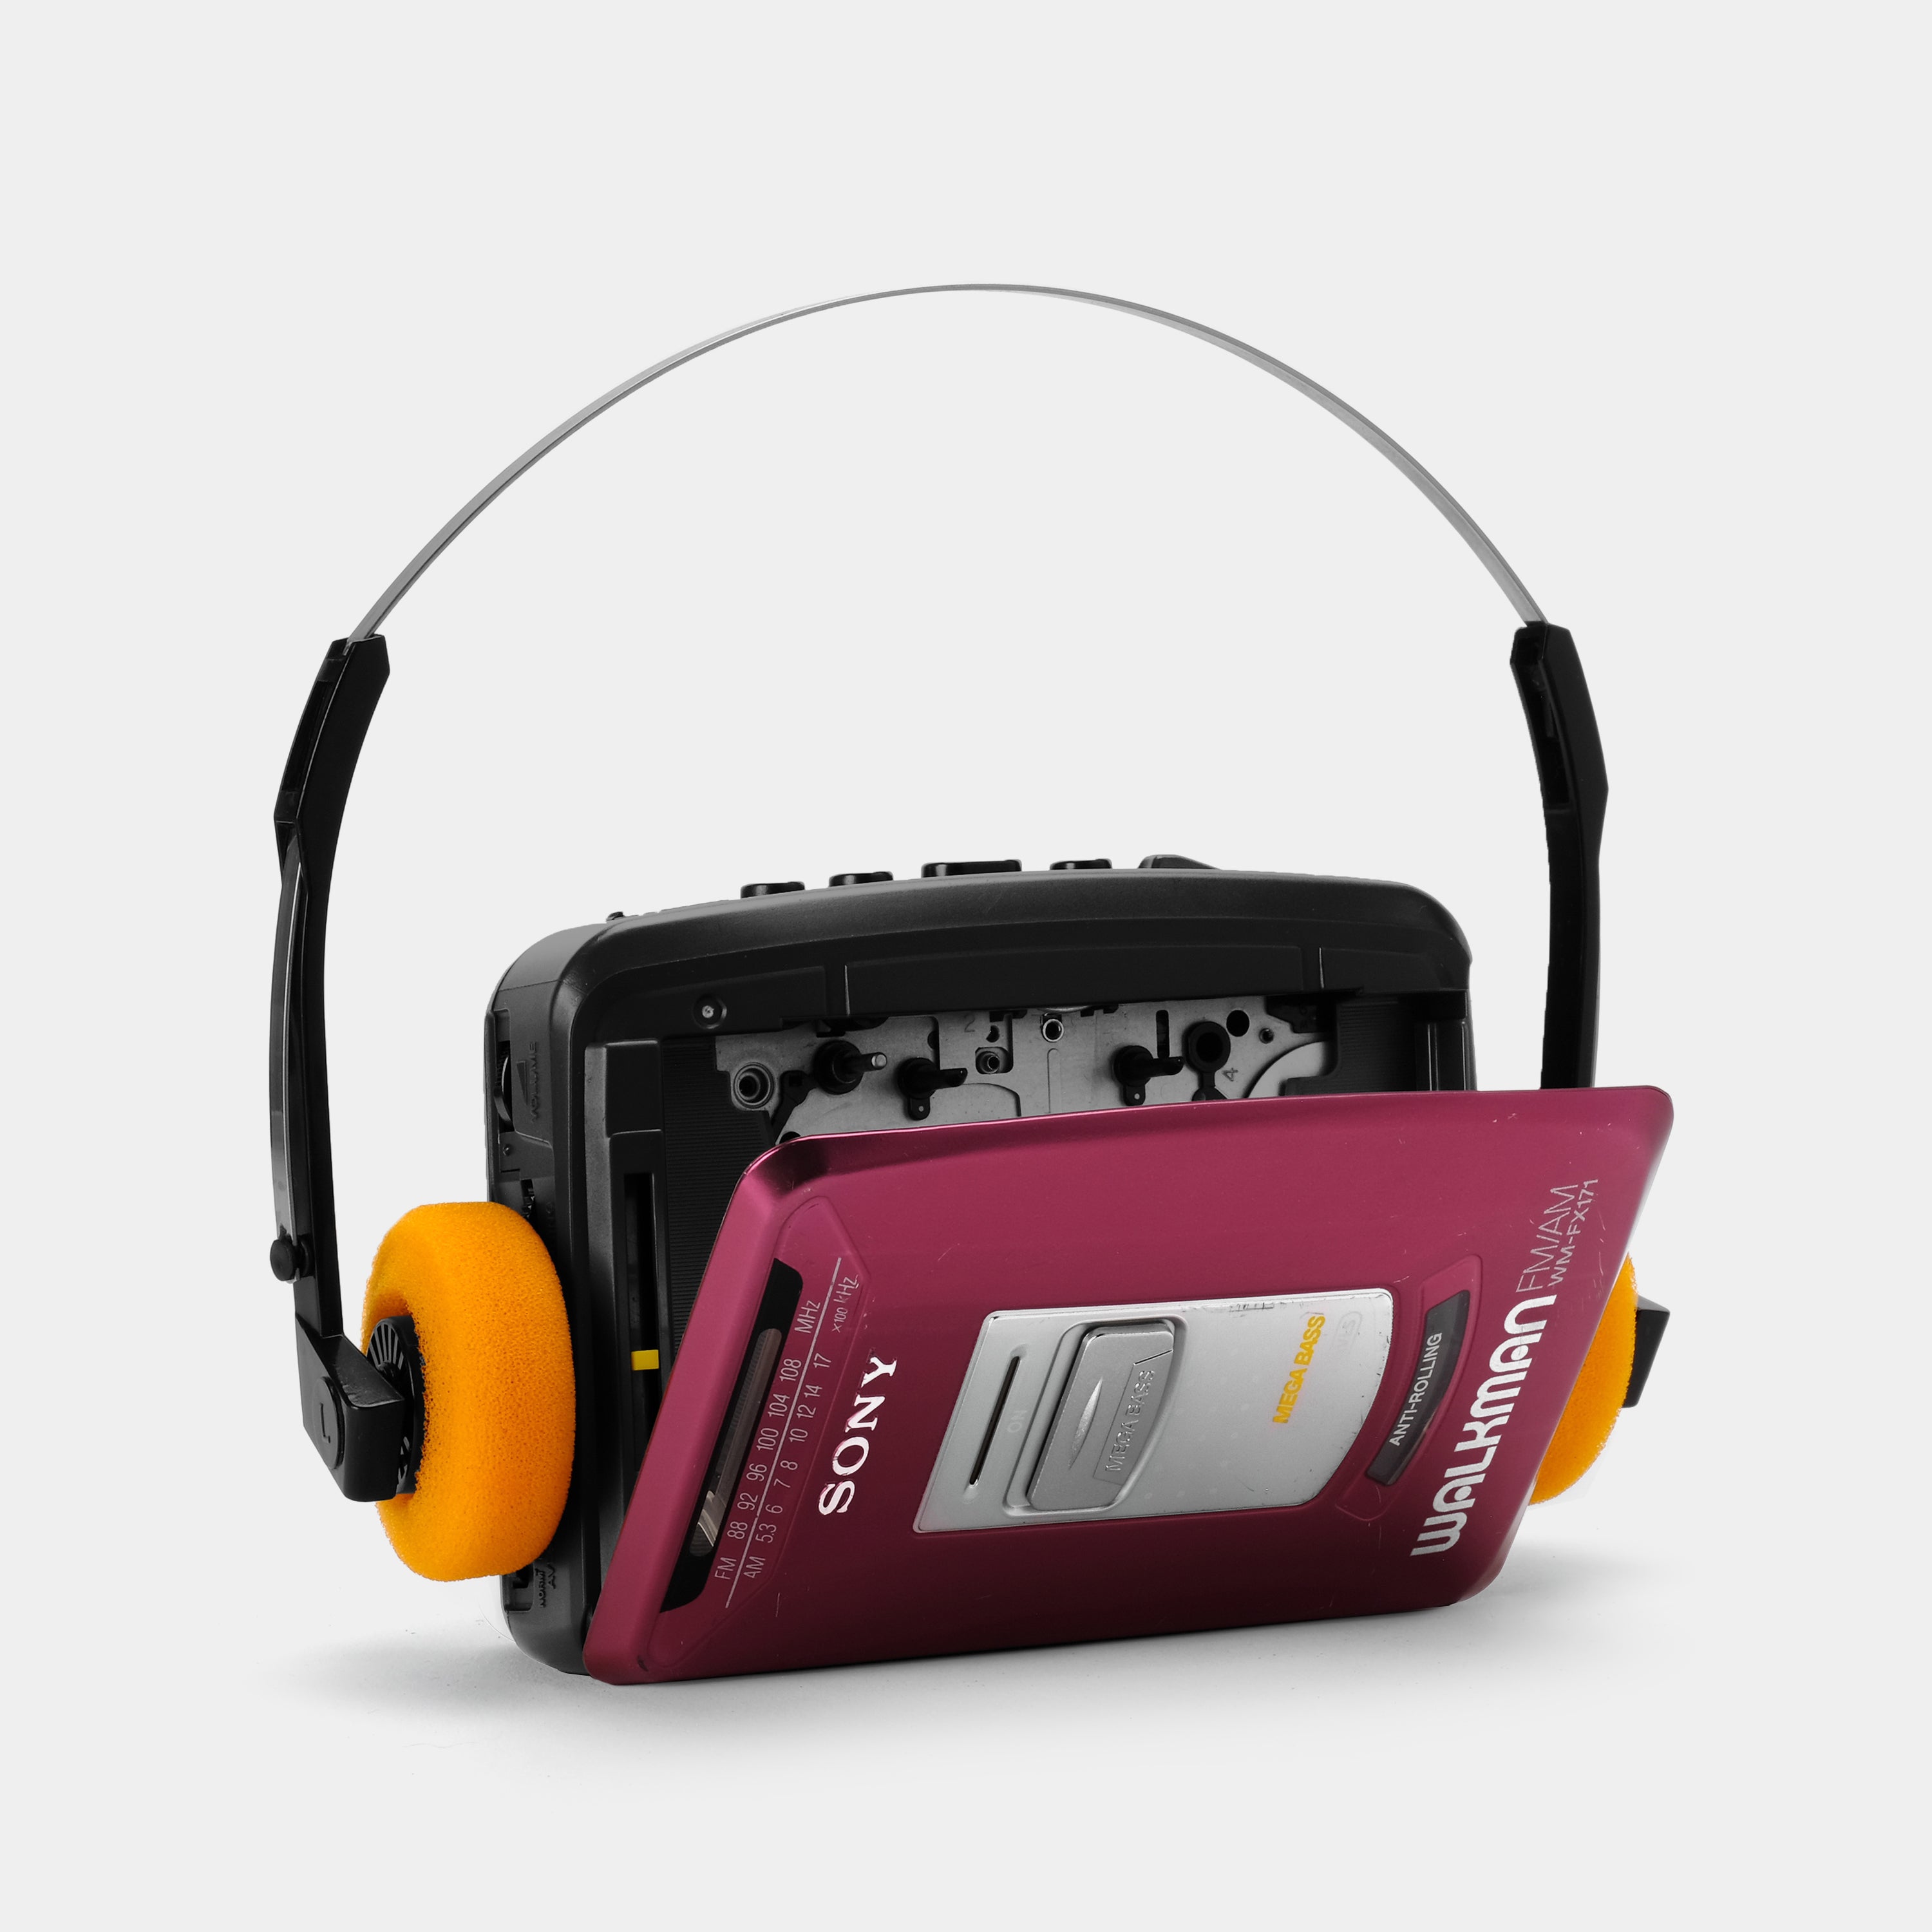 Sony Walkman WM-FX171 AM/FM Magenta Portable Cassette Player